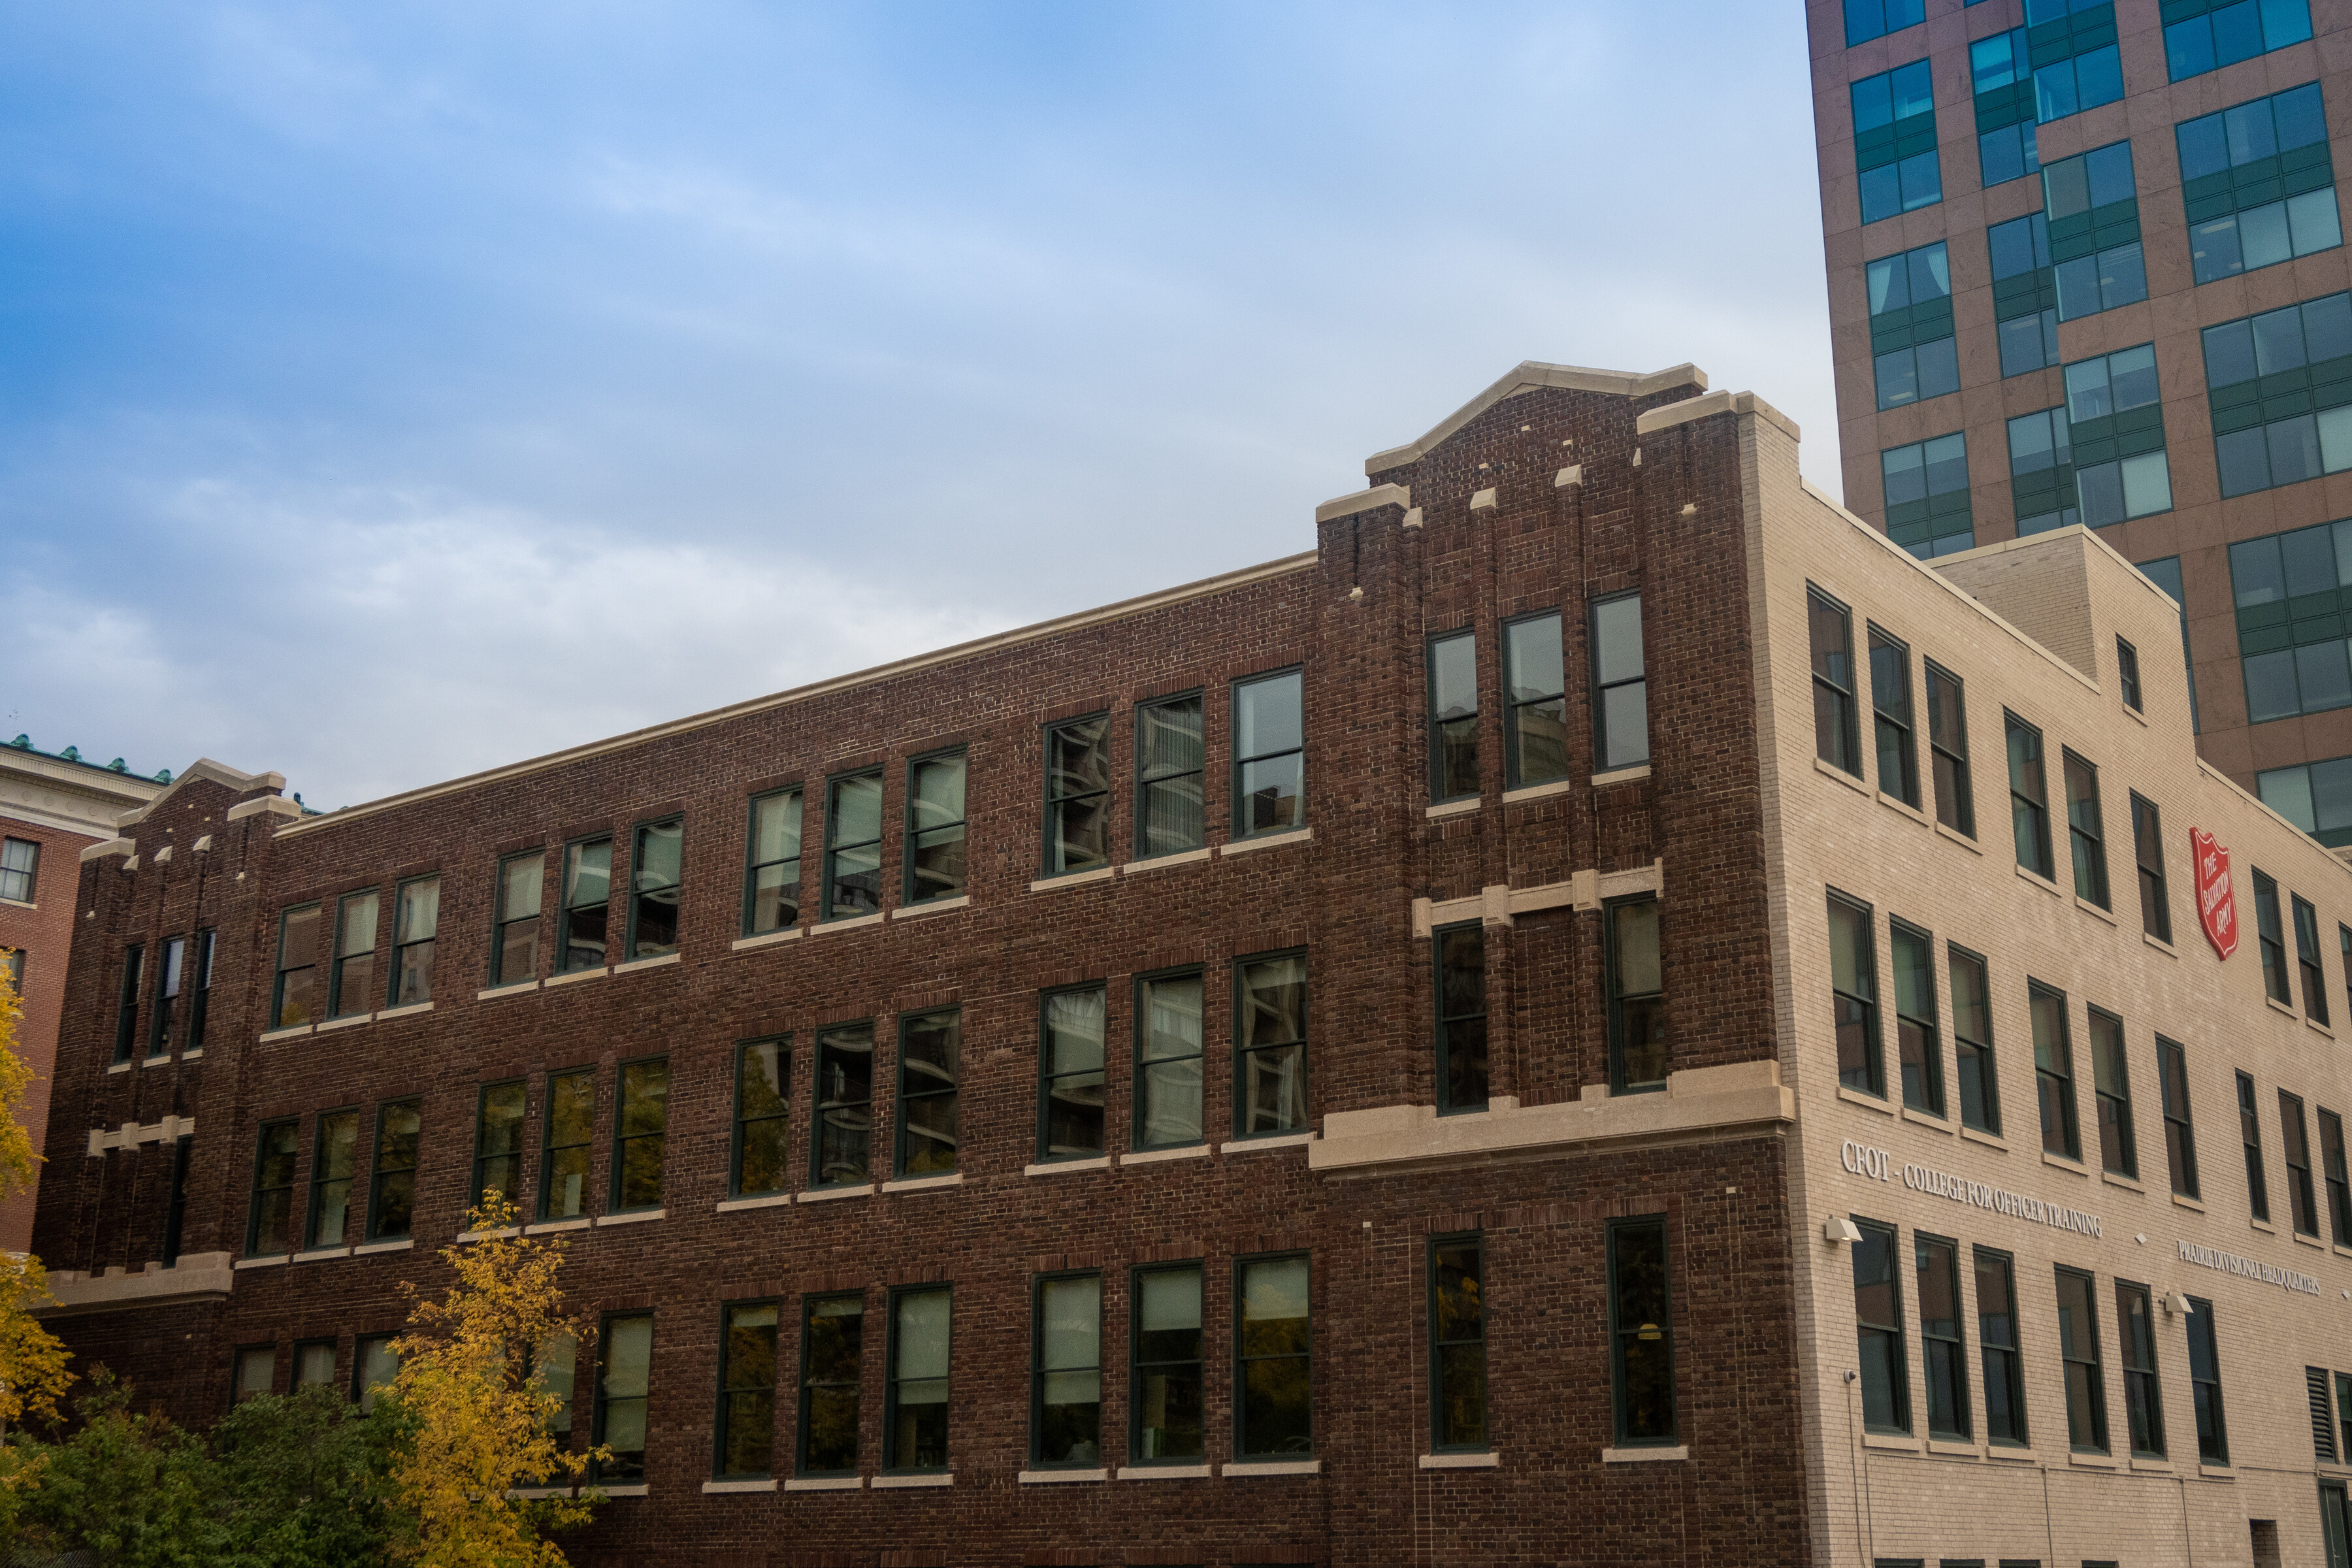 A four-story brick building with large windows across each floor.